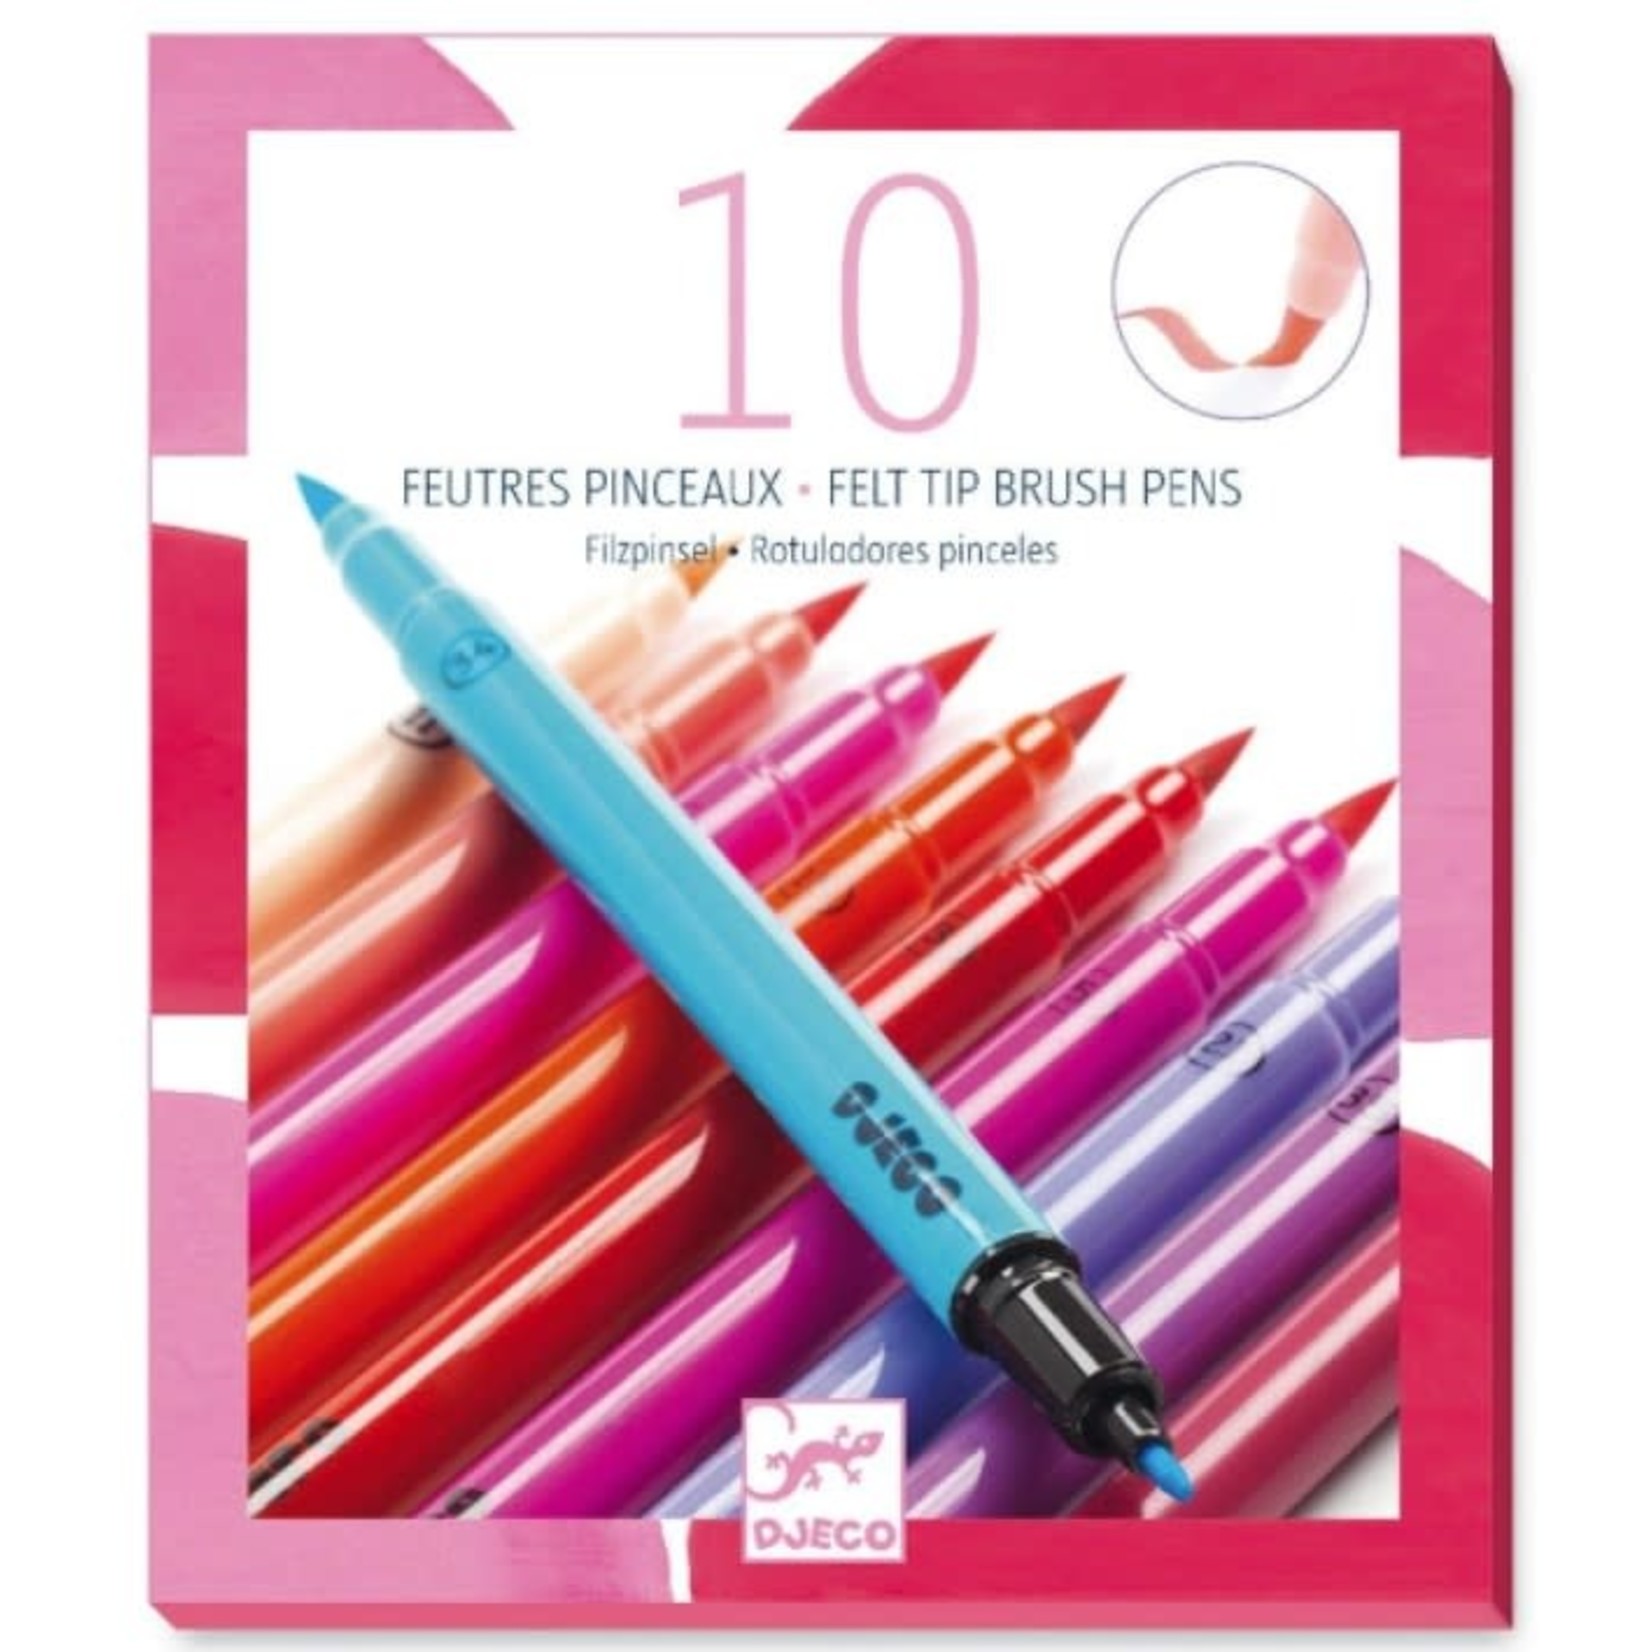 Djeco DJECO - 10 Felt Tip Brush Pens - Shades of pink 'Sweet'